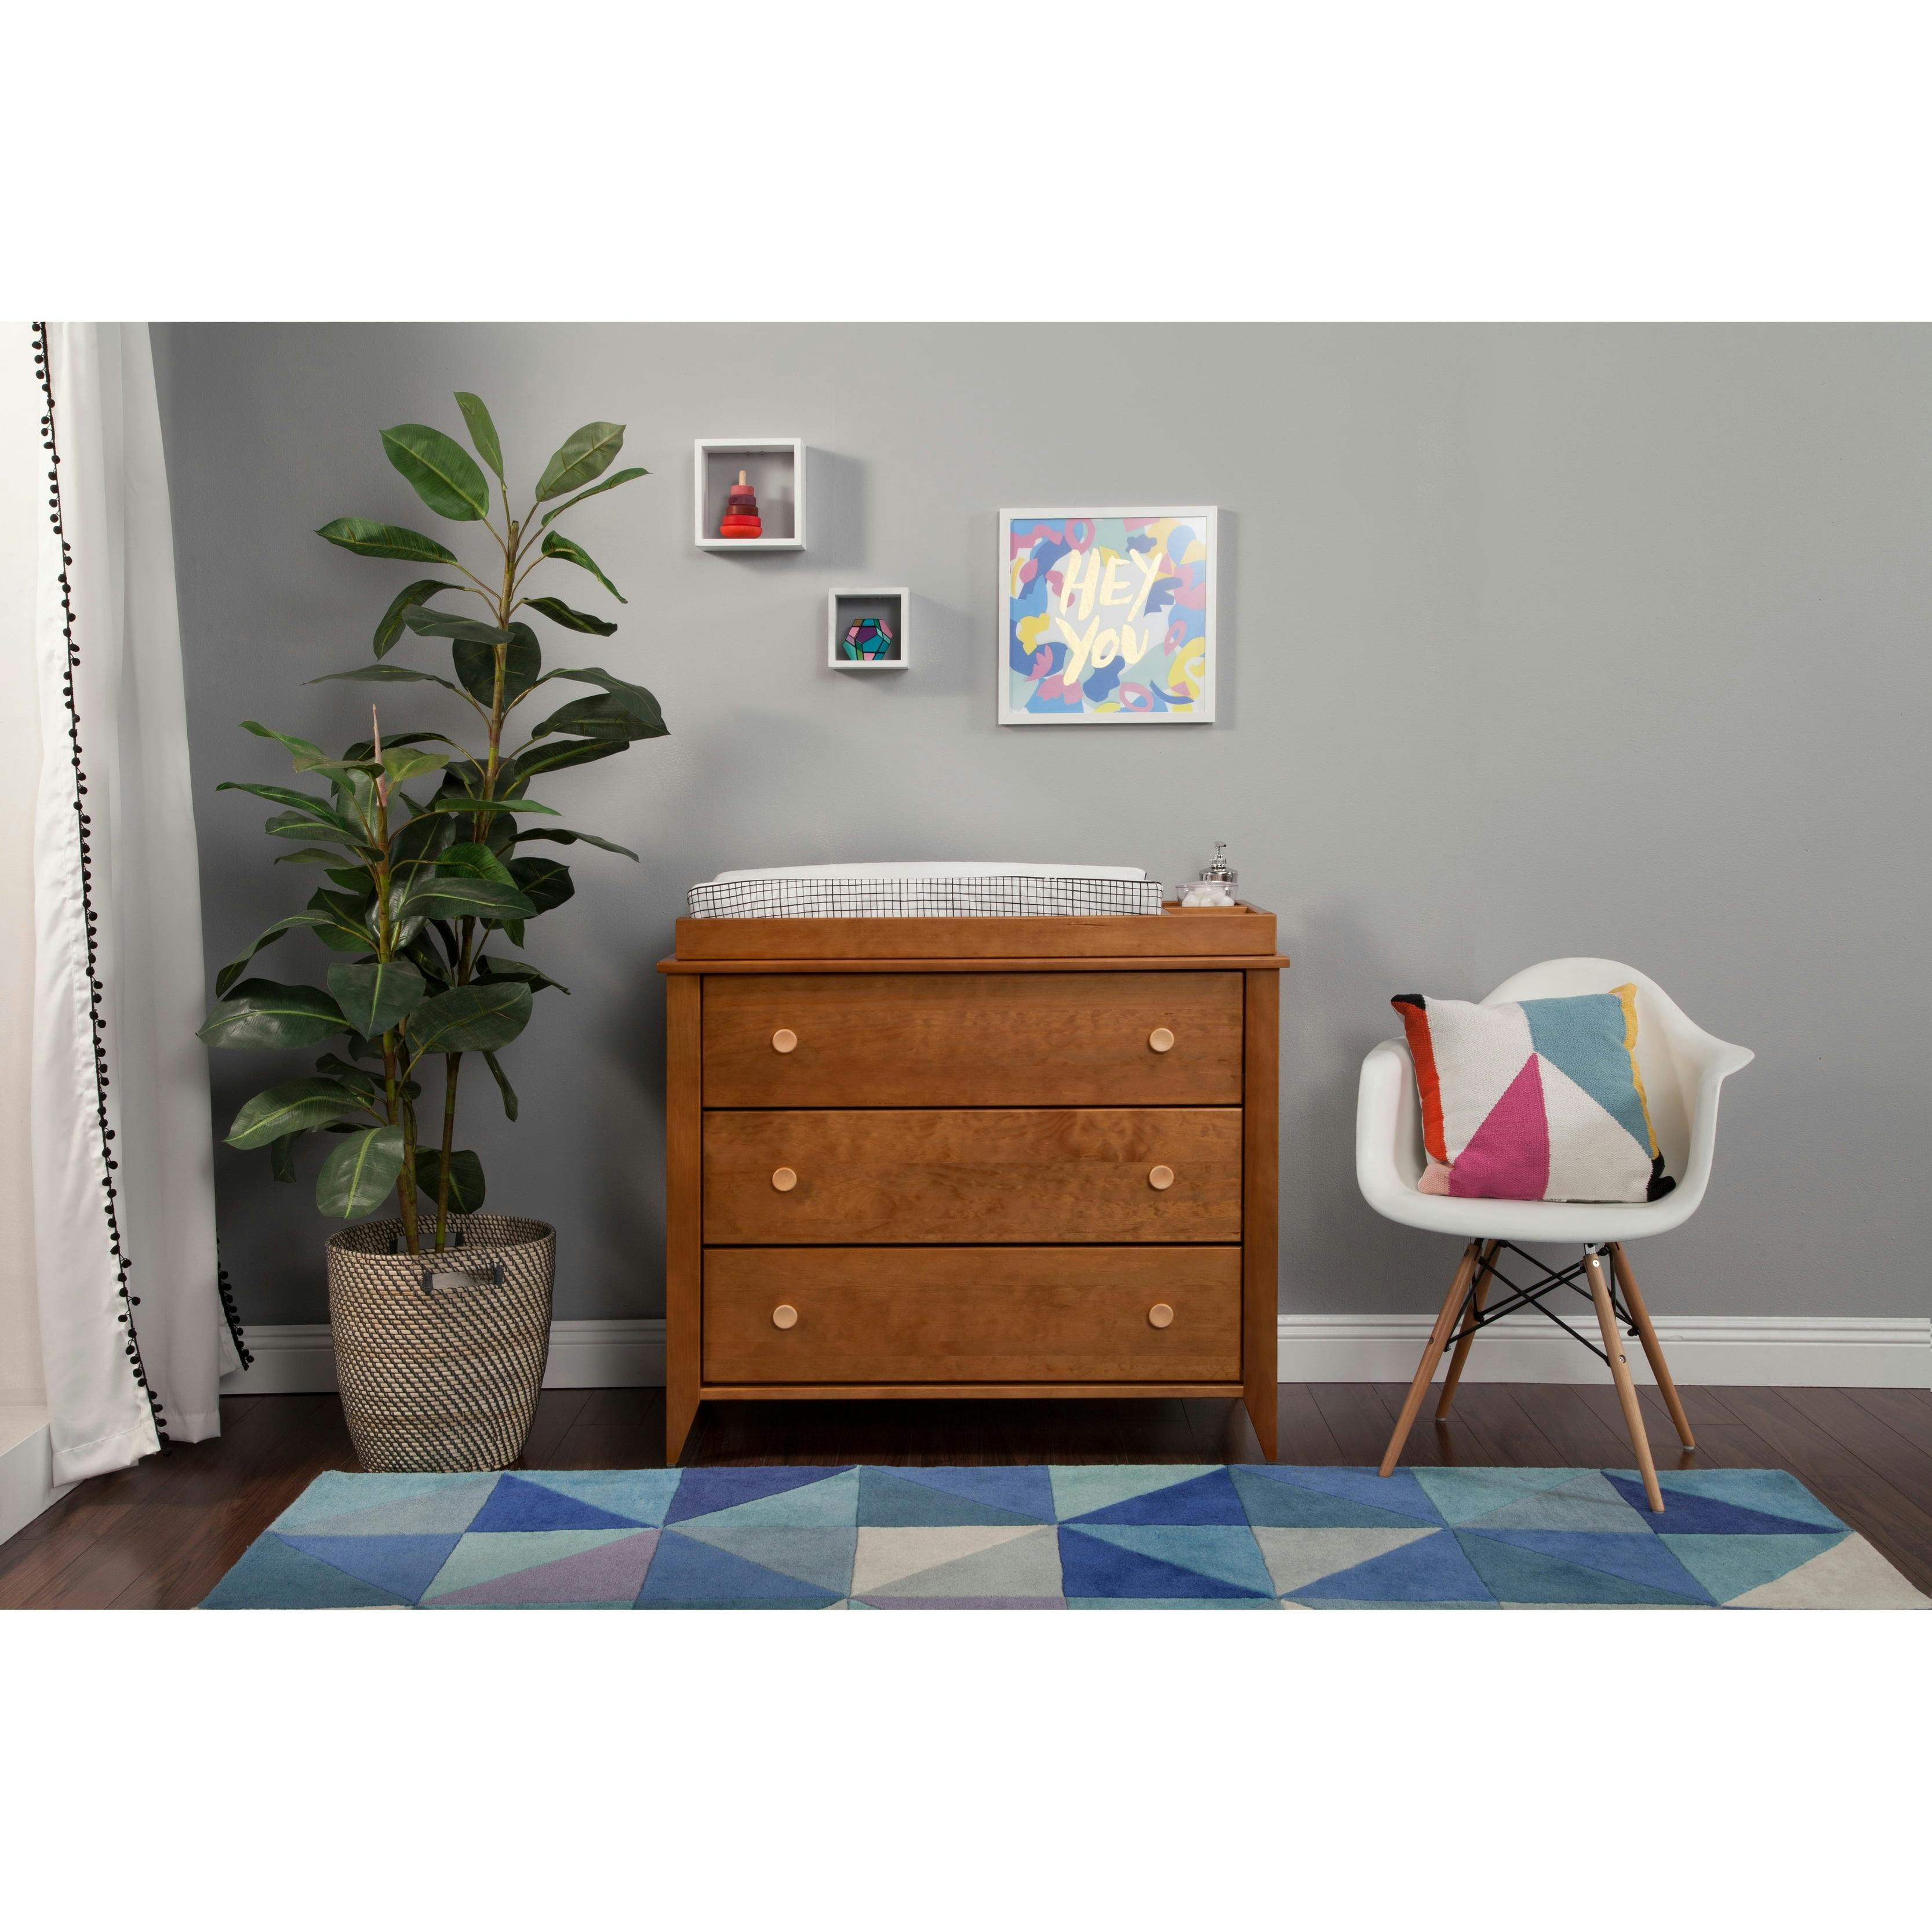 Sprout Chestnut and Natural 3-Drawer Changer Dresser